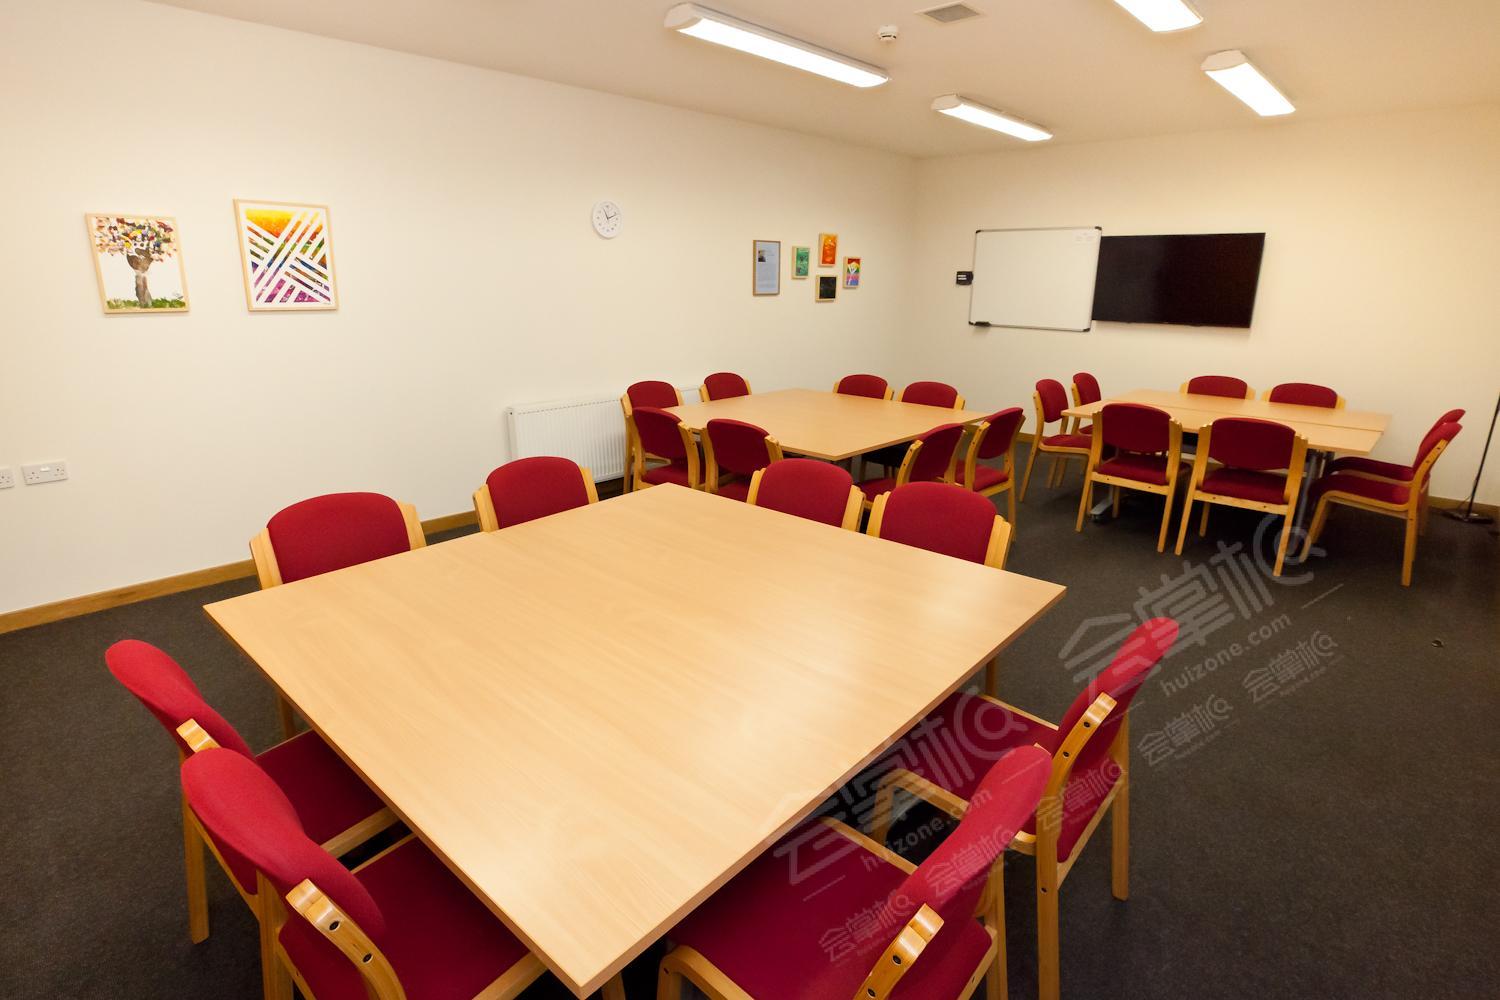 Napier Meeting Room